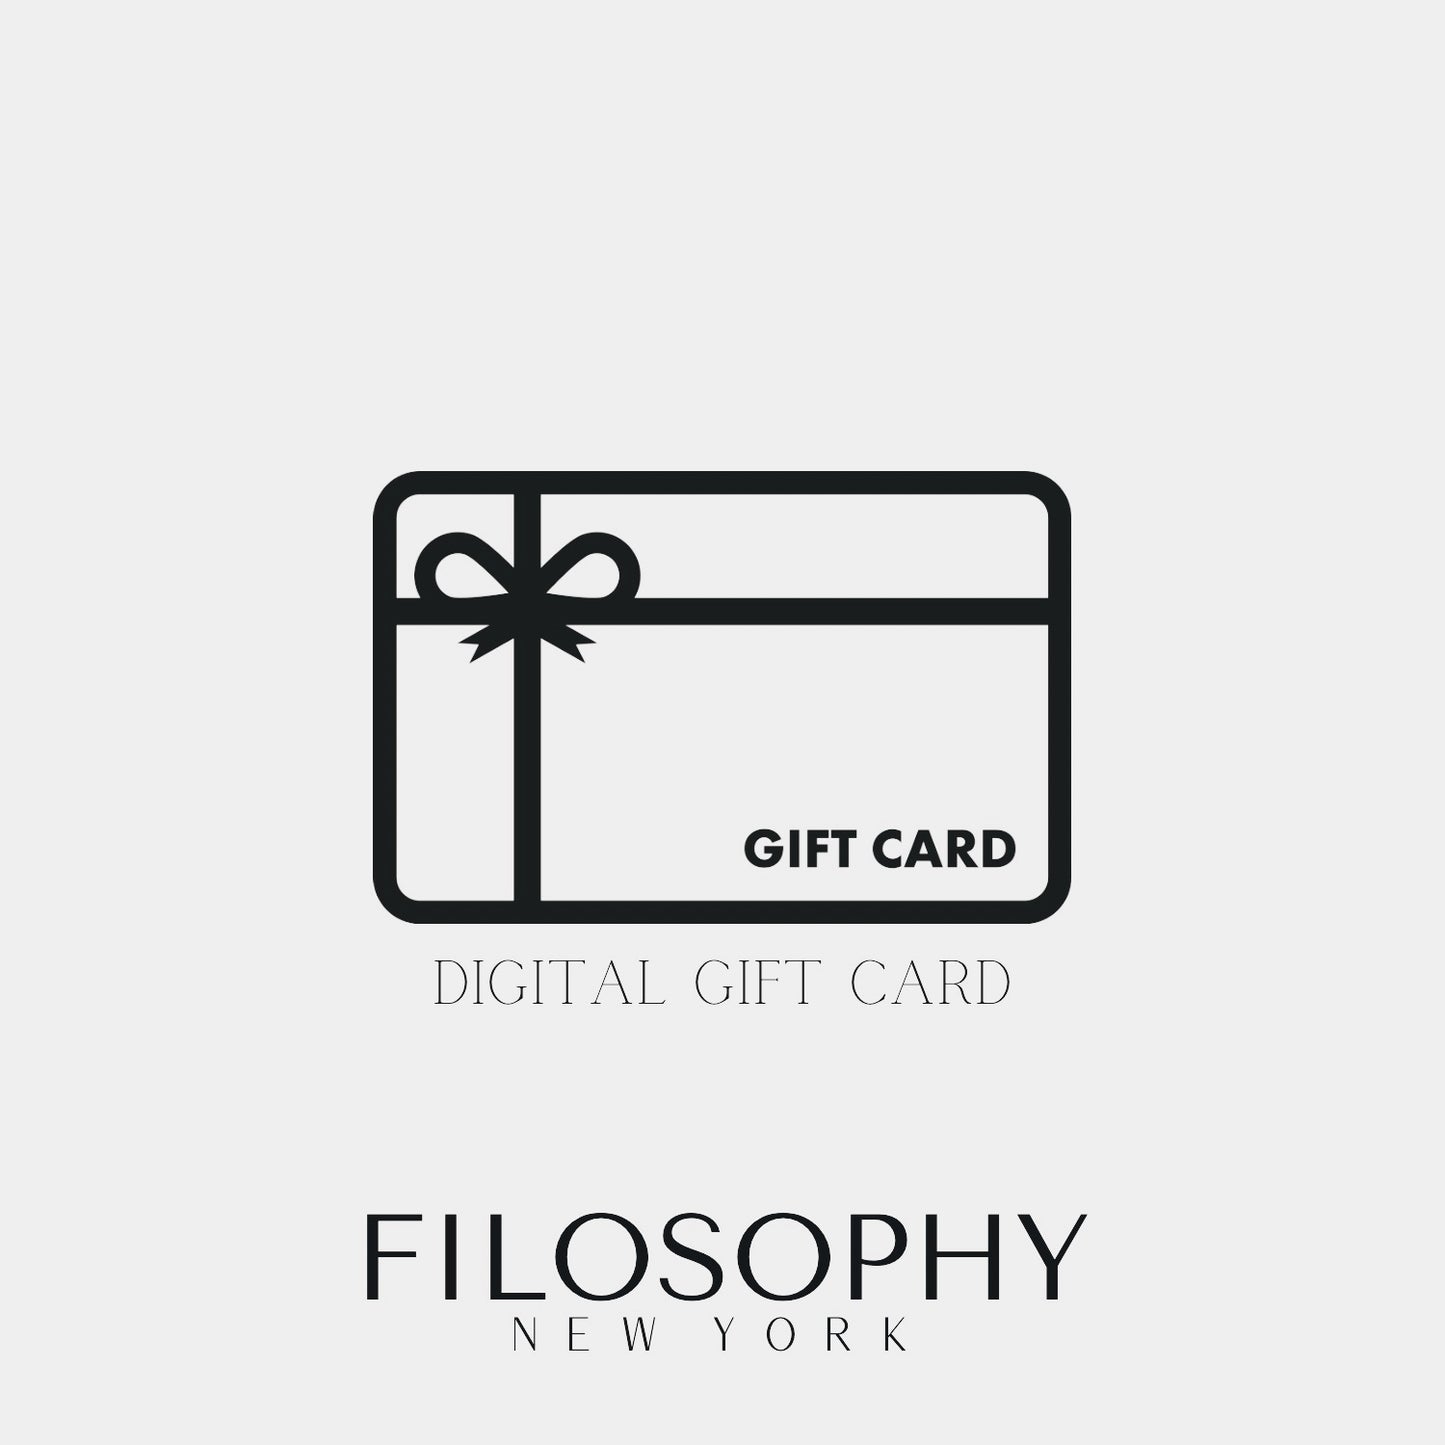 Filosophy Gift Card